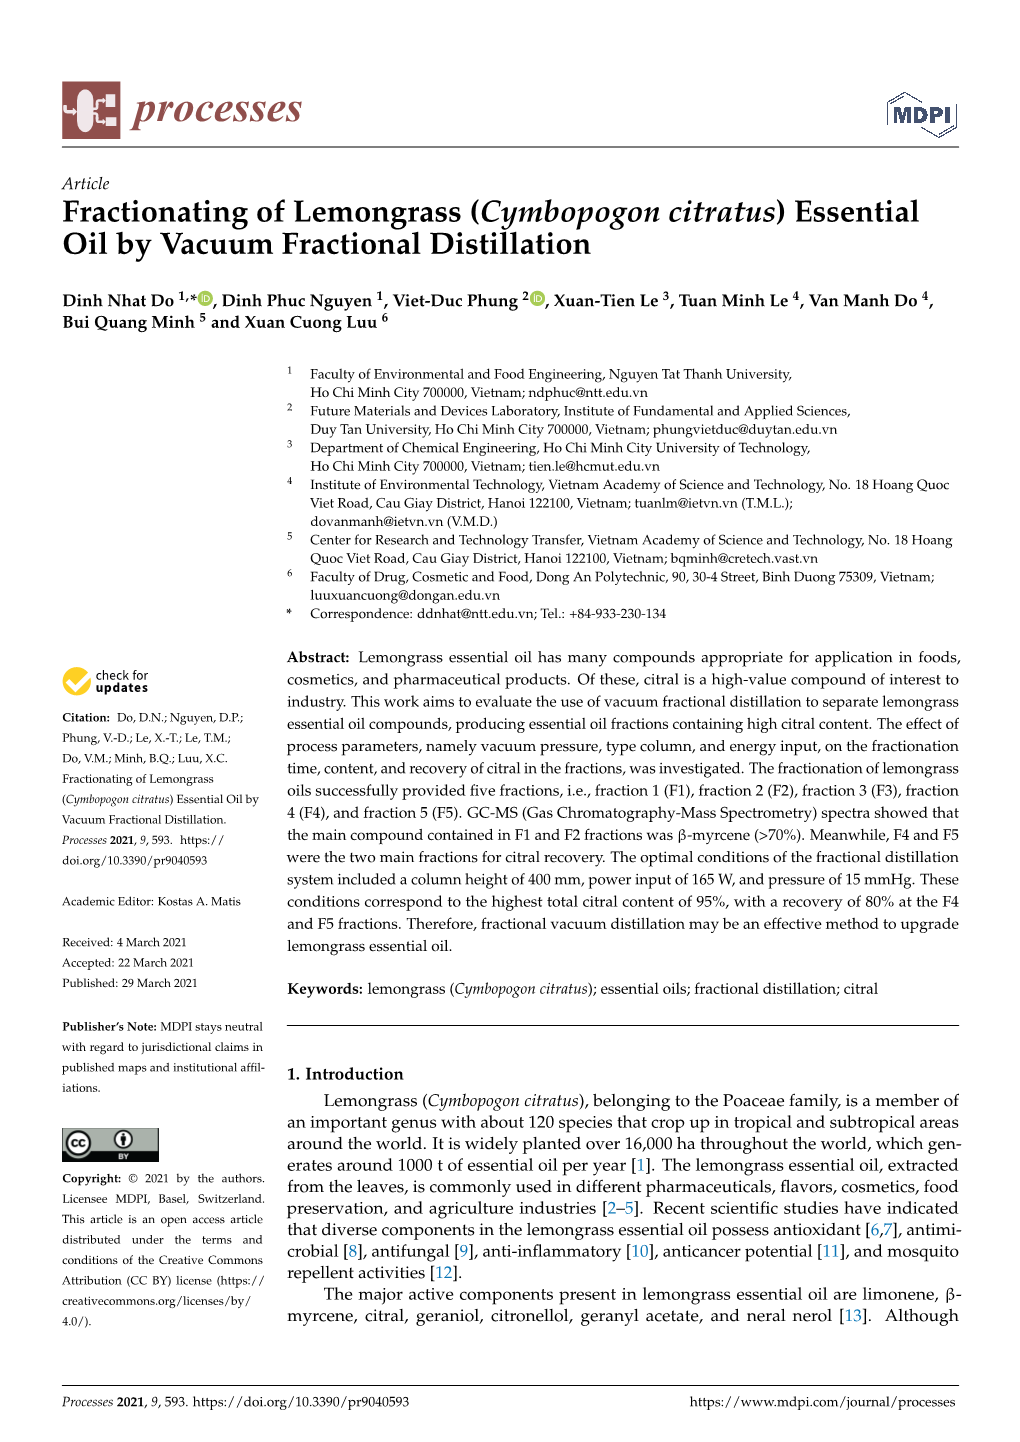 (Cymbopogon Citratus) Essential Oil by Vacuum Fractional Distillation